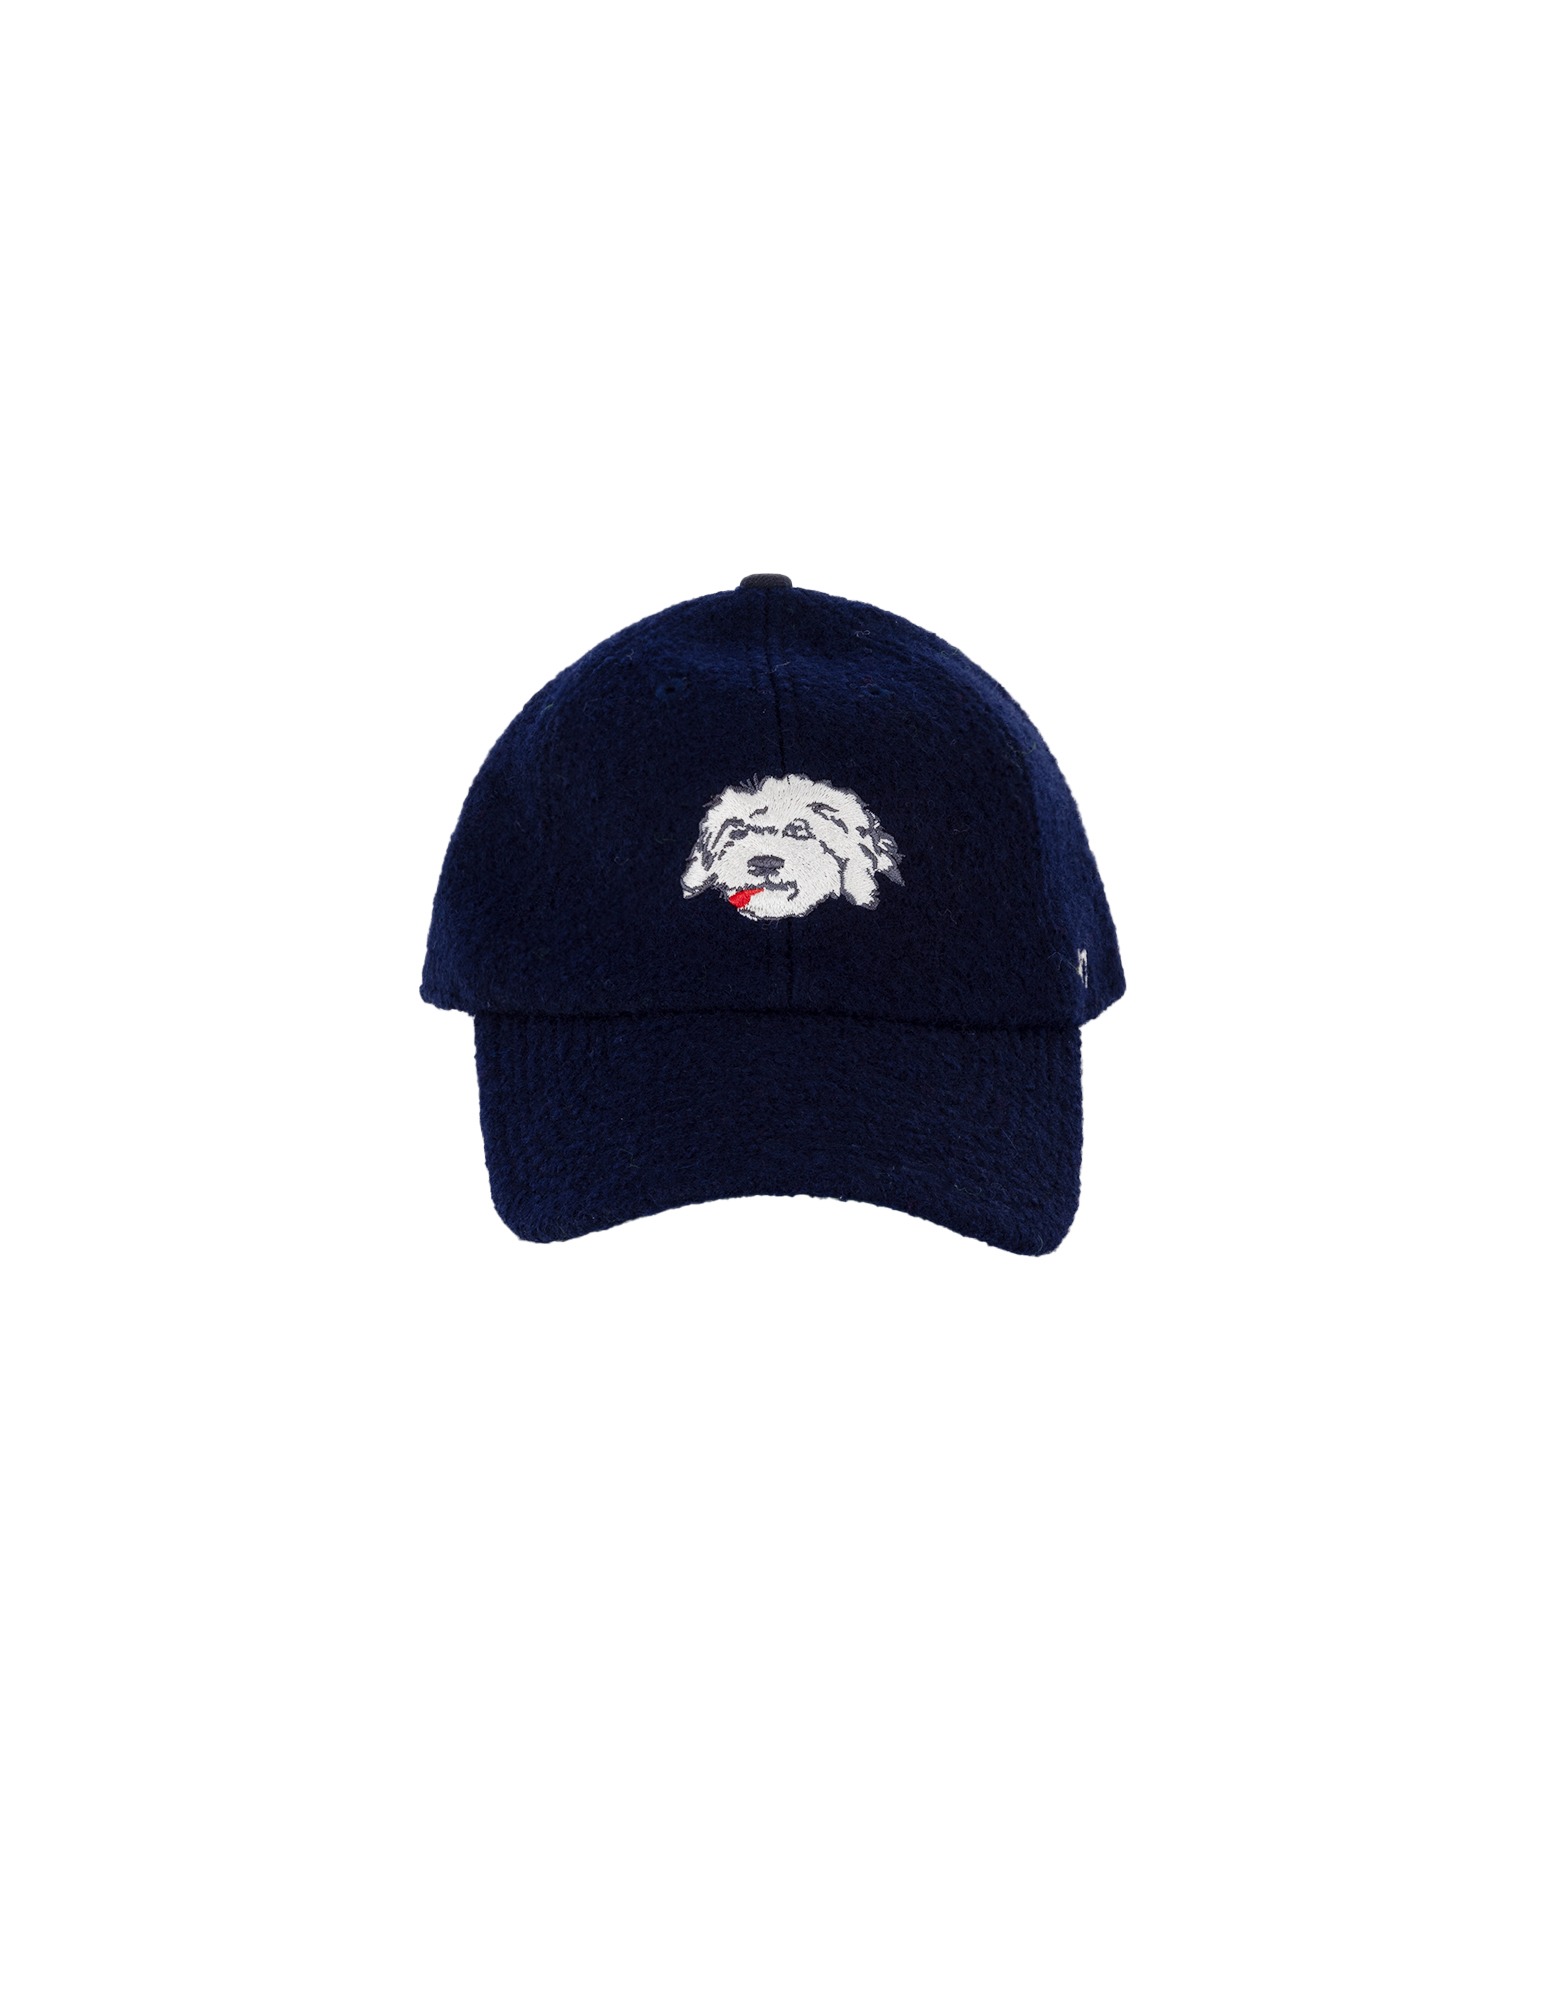 Shaggy Dog Baseball Cap (Navy)